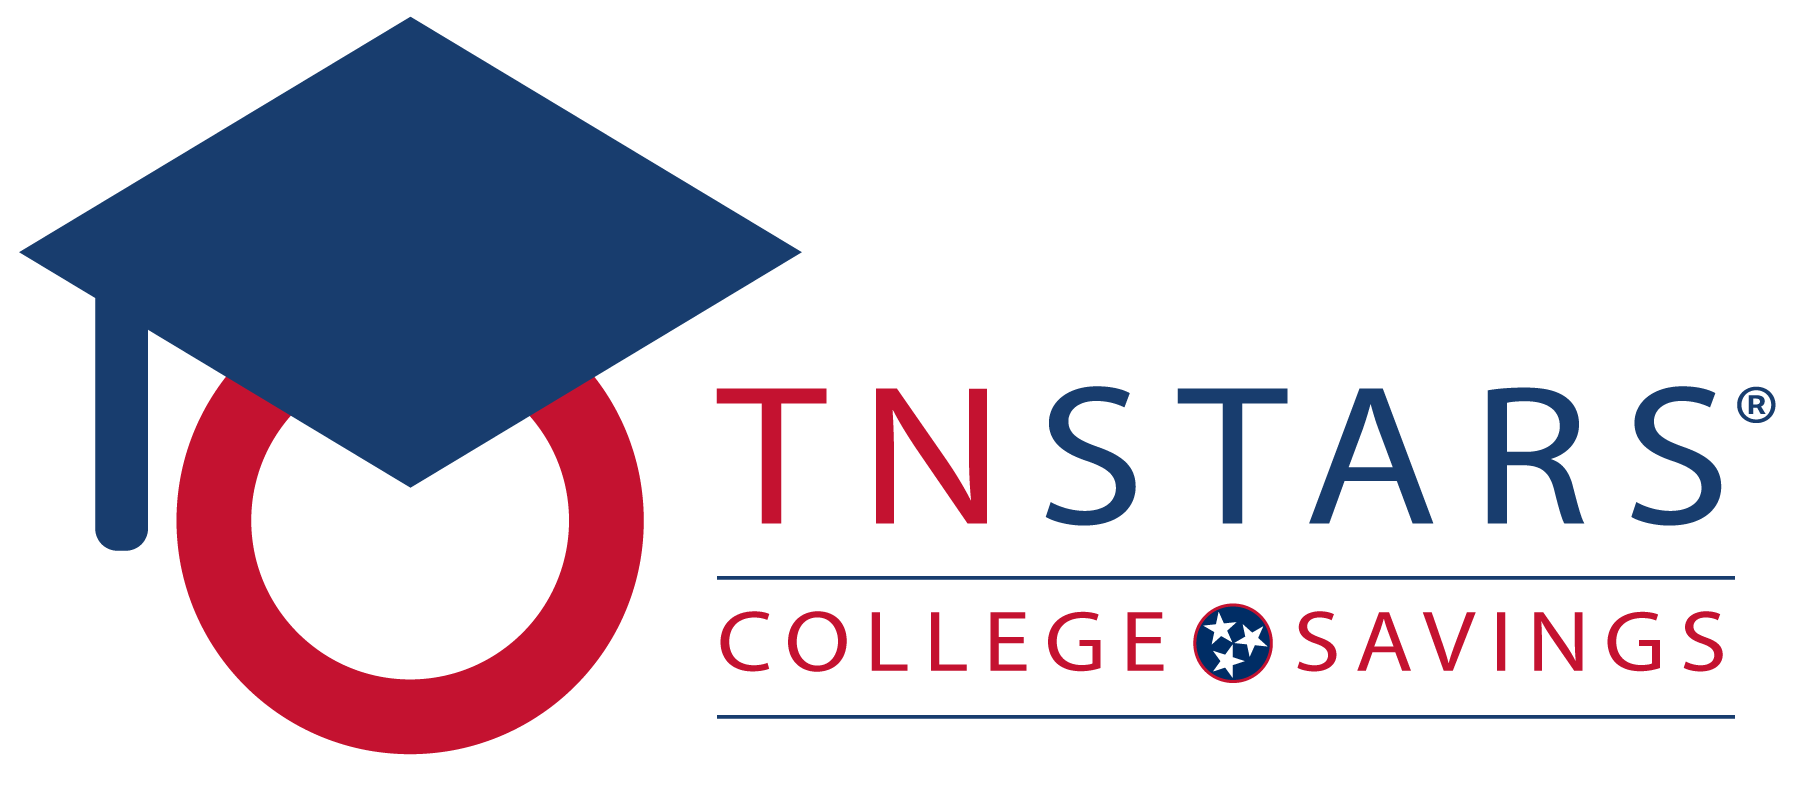 TNStars College Savings